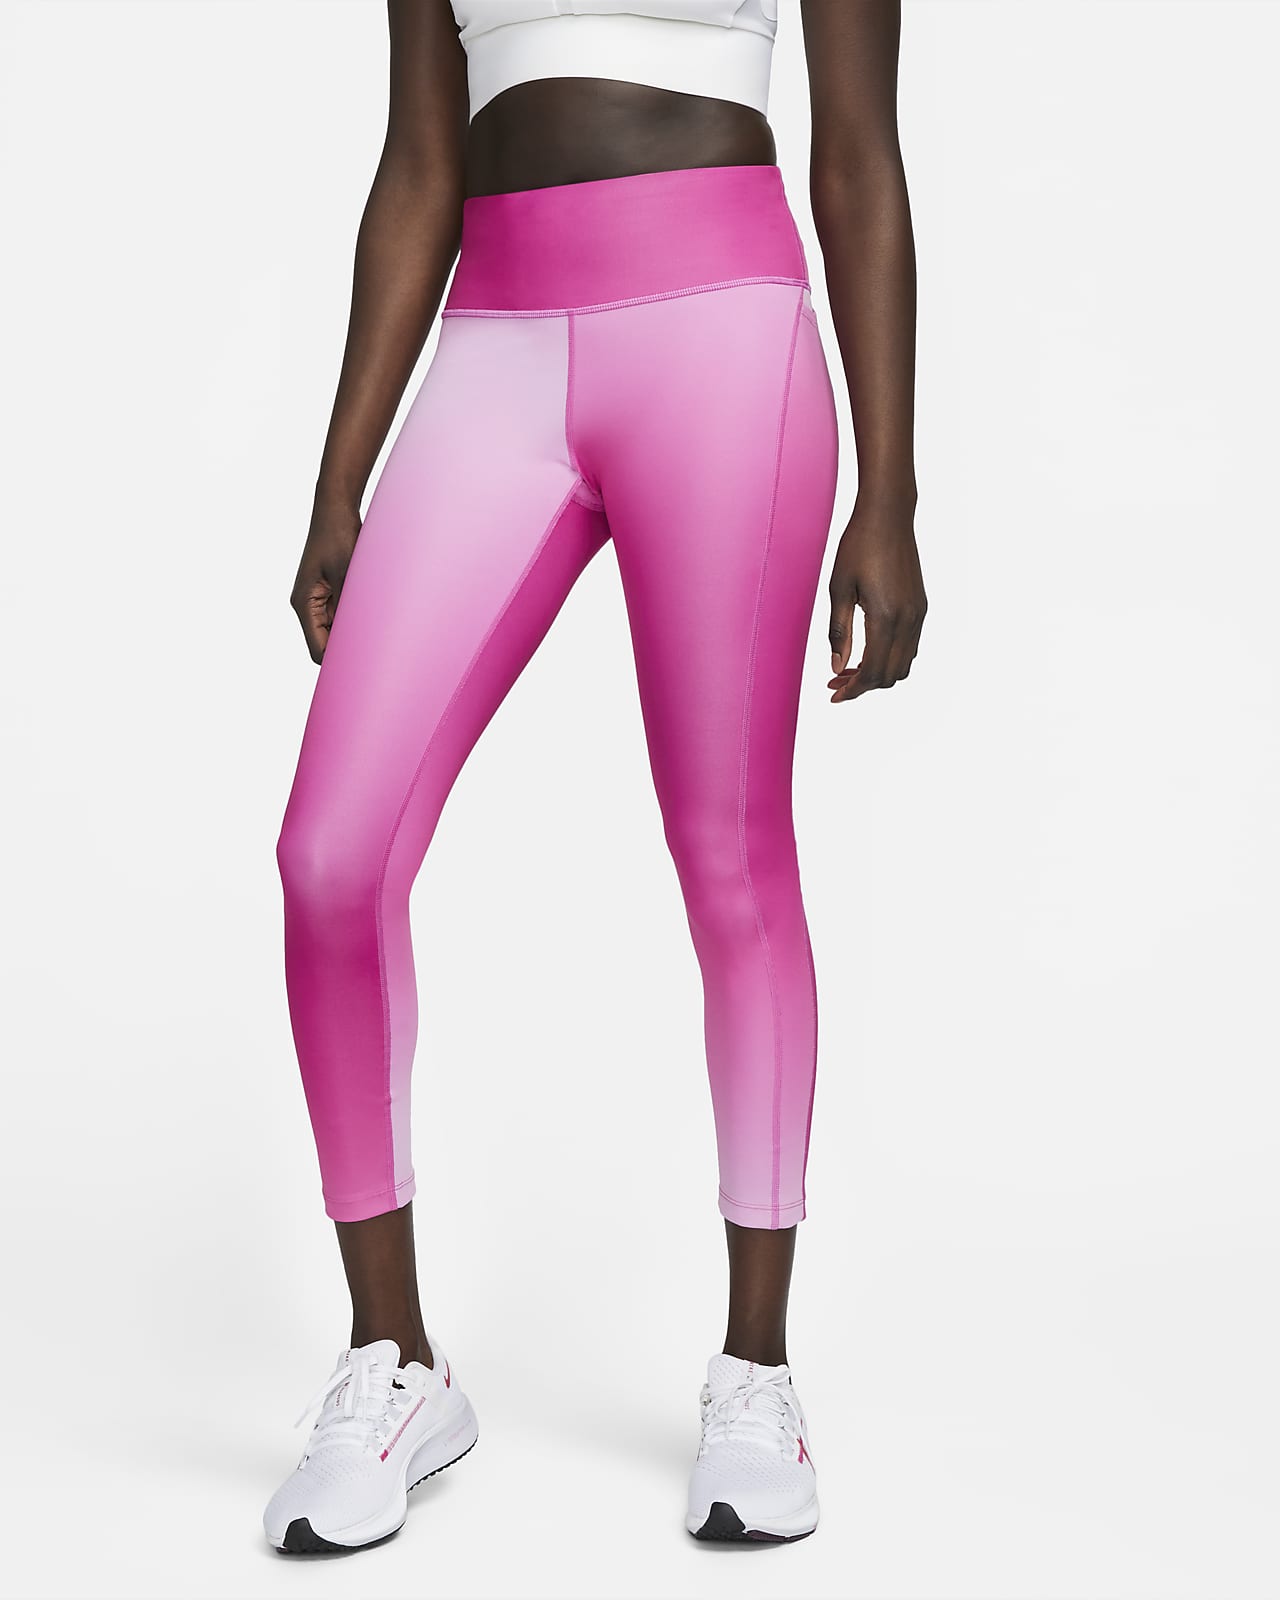 Nike Fast Women's Mid-Rise 7/8 Gradient-Dye Running Leggings with